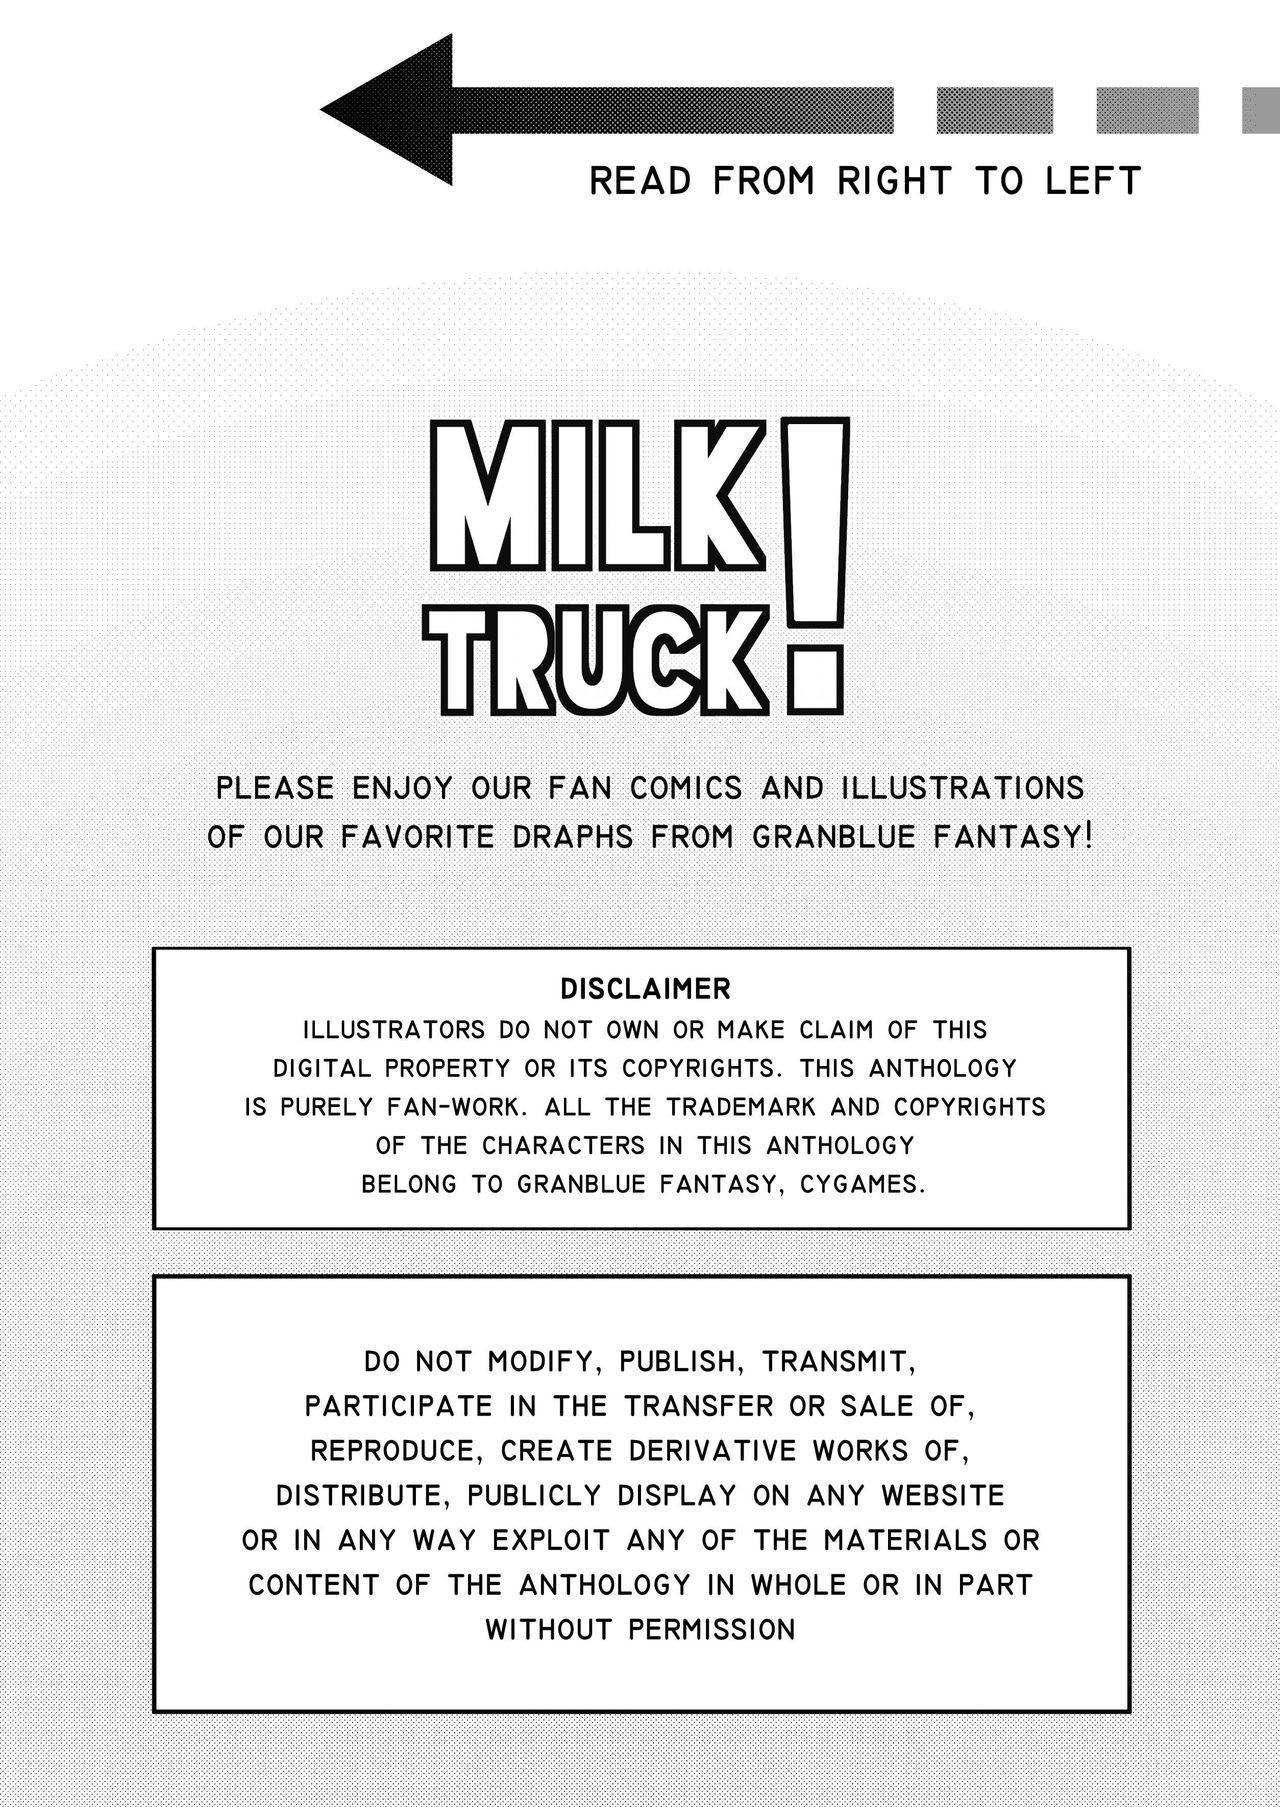 Milk Truck! - Unofficial Granblue Fantasy Draph Anthology 2